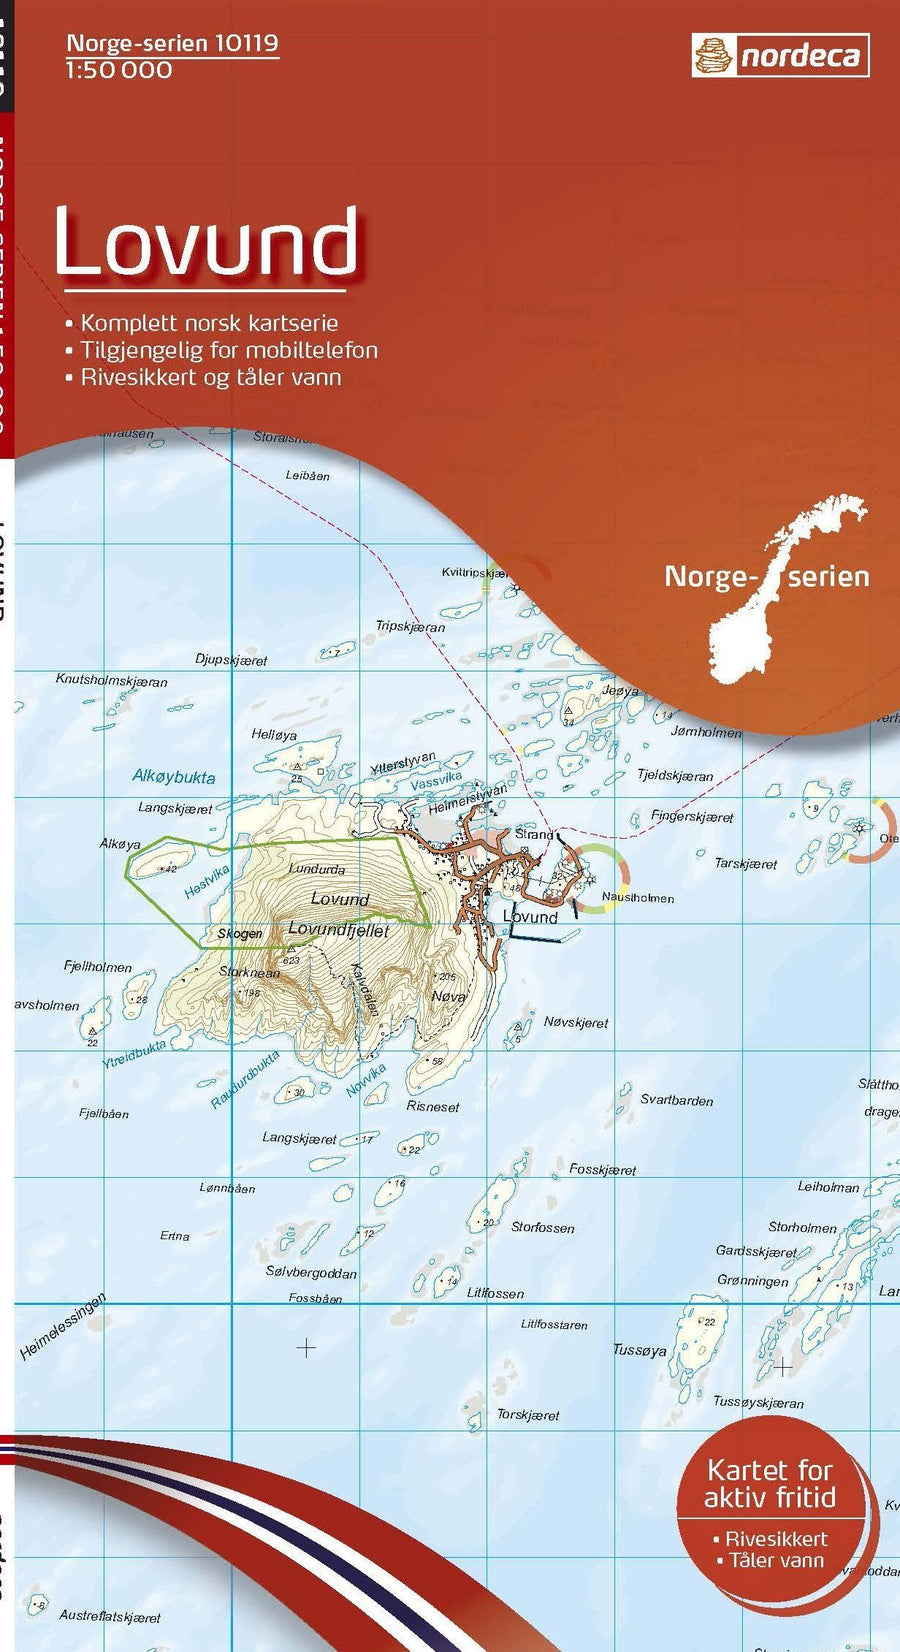 Carte de randonnée n° 10119 - Lovund (Norvège) | Nordeca - Norge-serien carte pliée Nordeca 